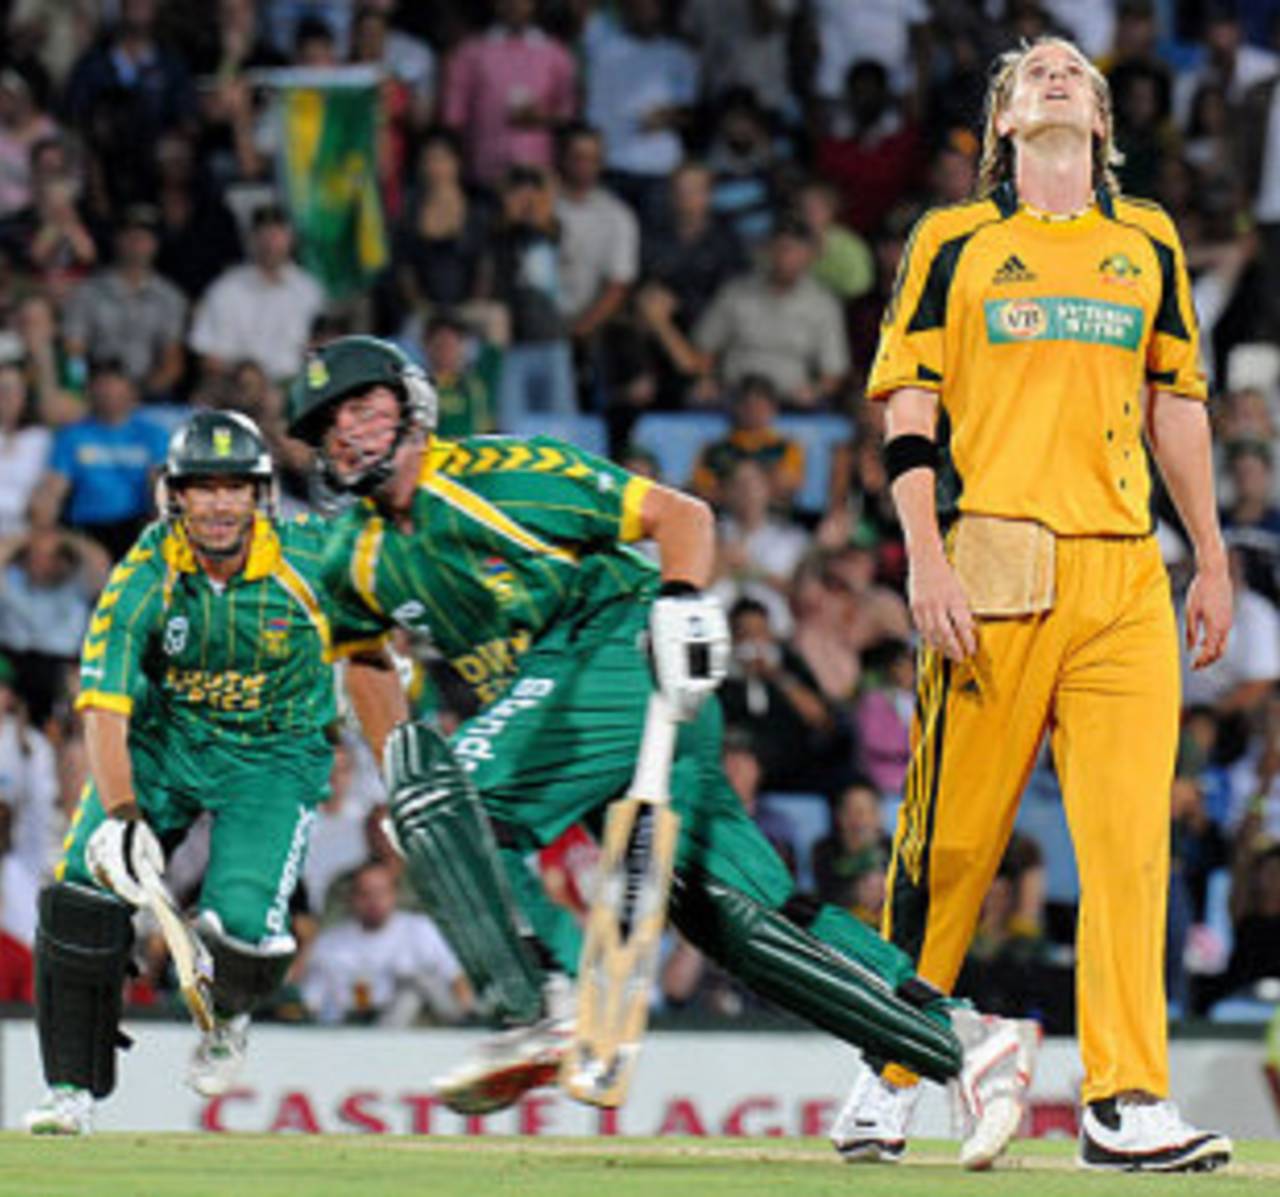 Nathan Bracken looks skywards as the ball goes into orbit, South Africa v Australia, 2nd Twenty20, Centurion, March 29, 2009